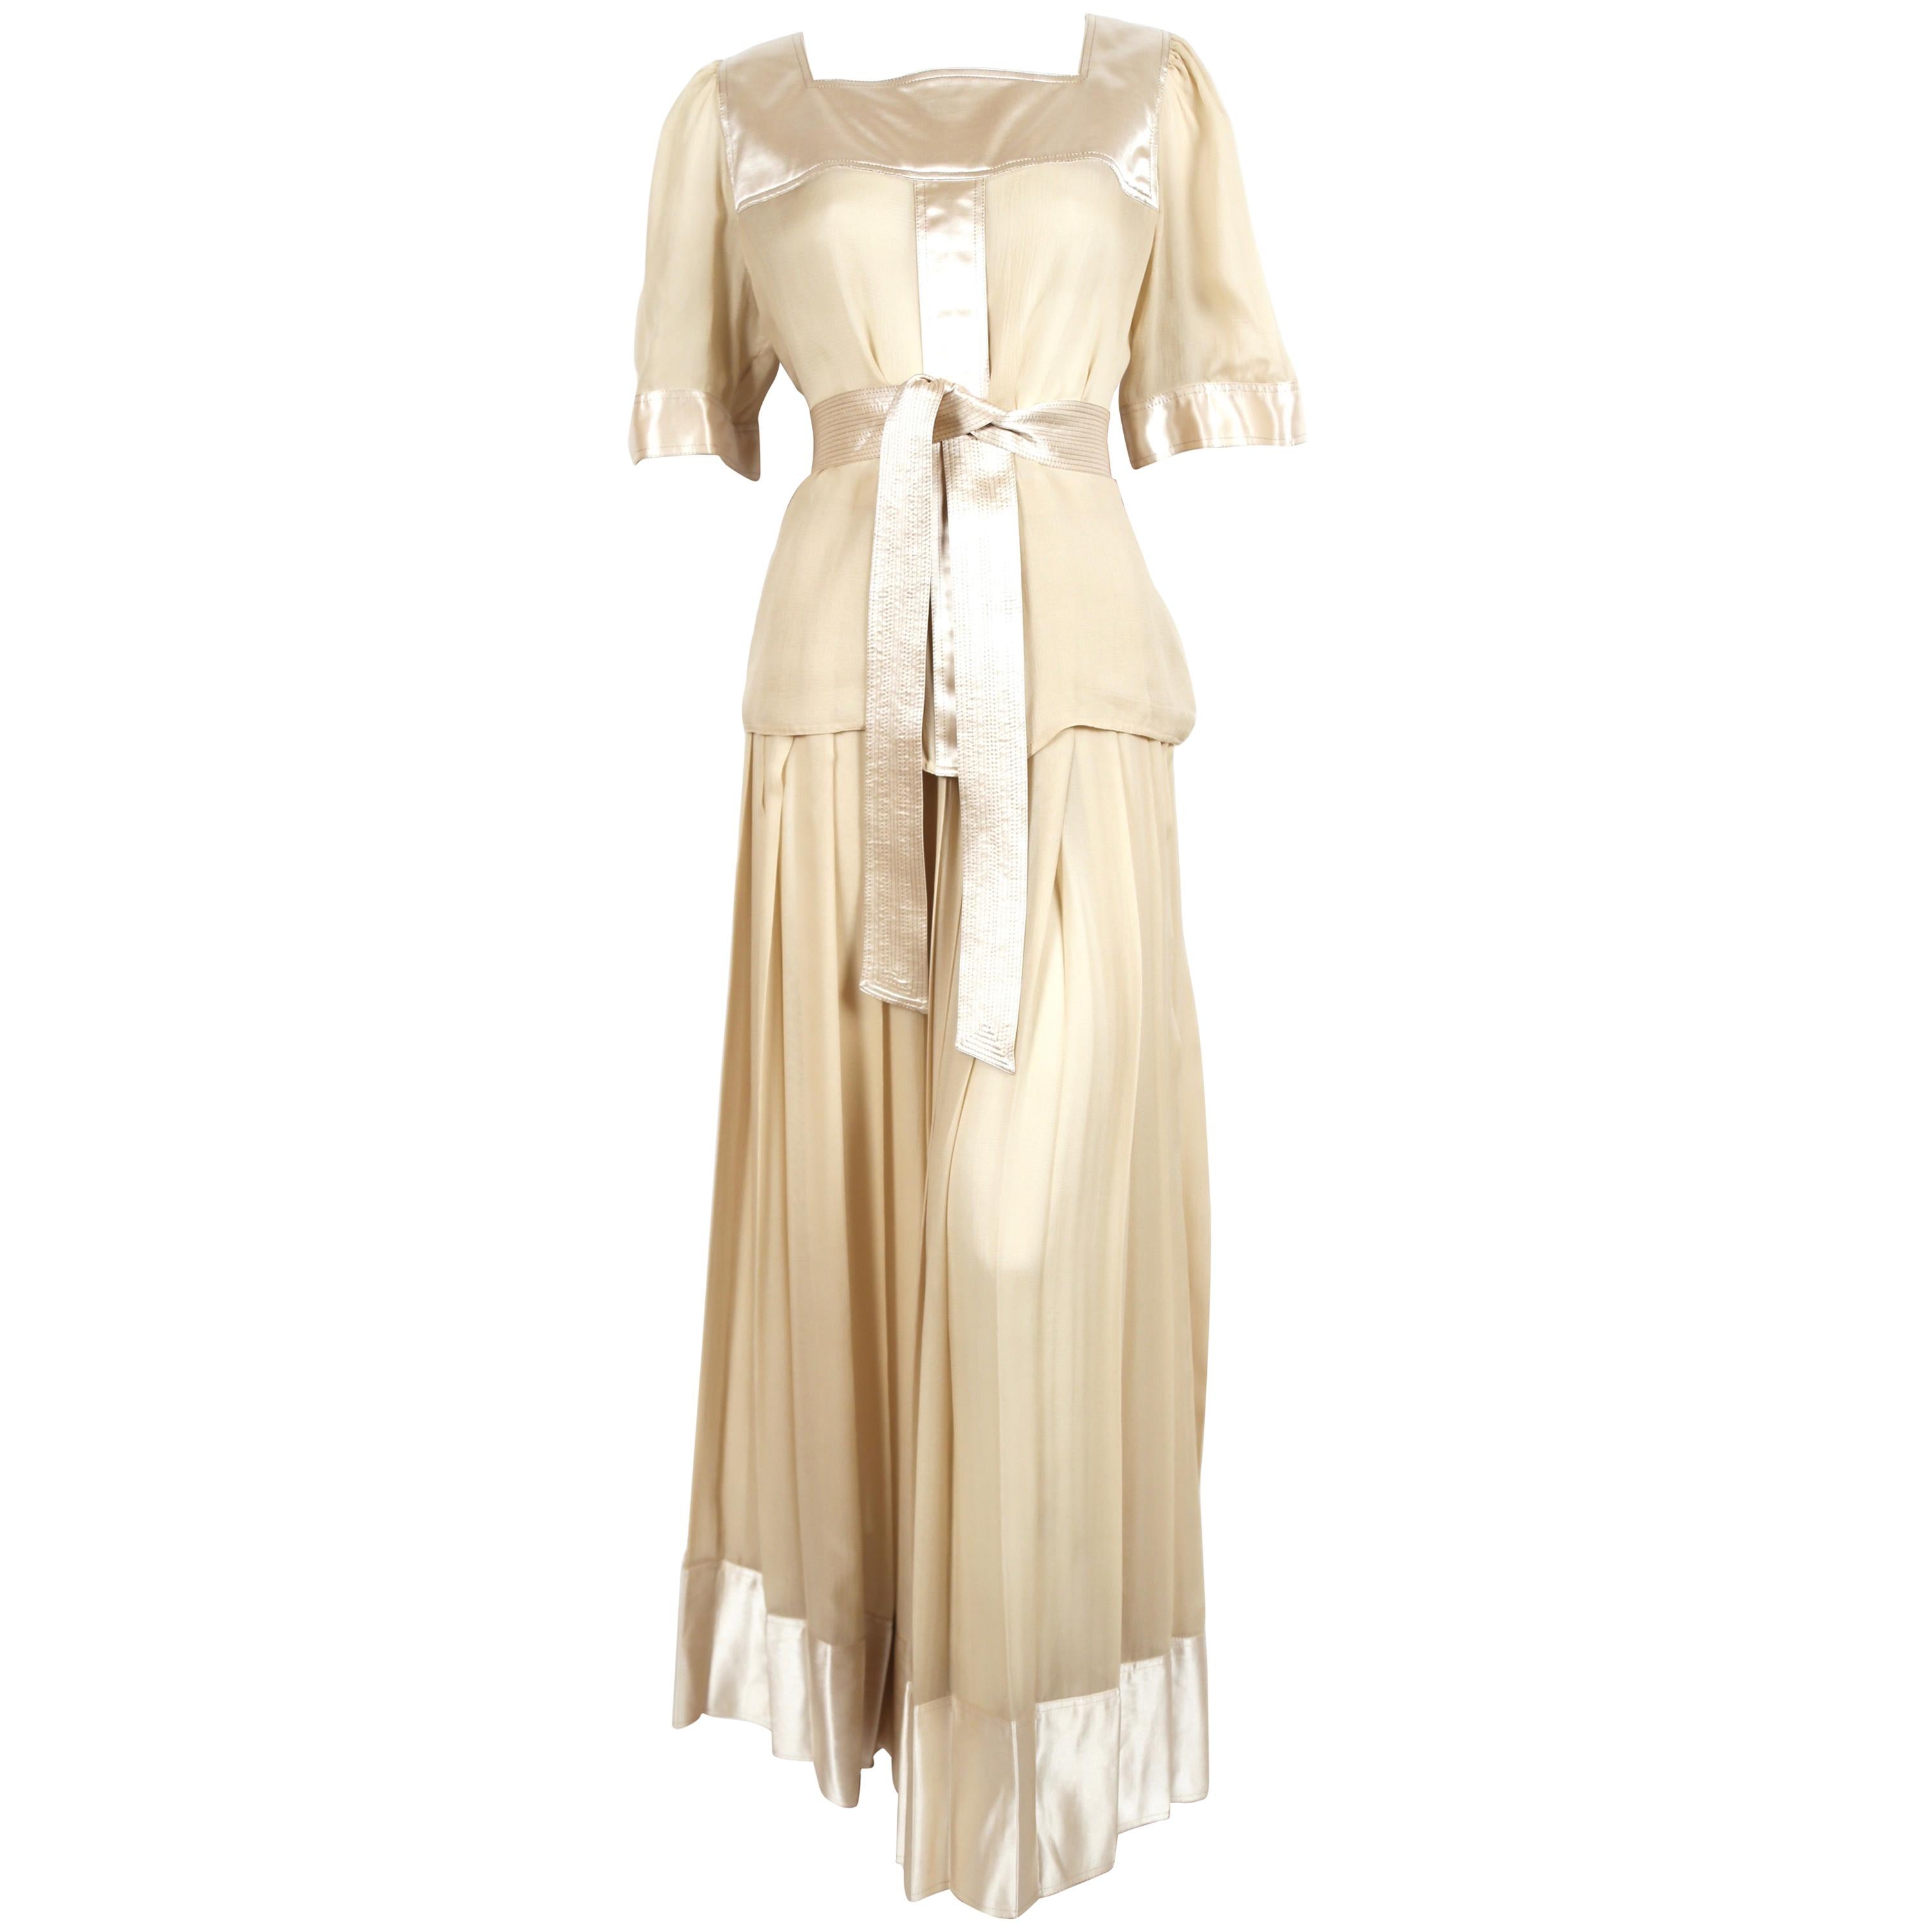 1970's GEOFFREY BEENE silk blouse & skirt ensemble with metallic gold thread